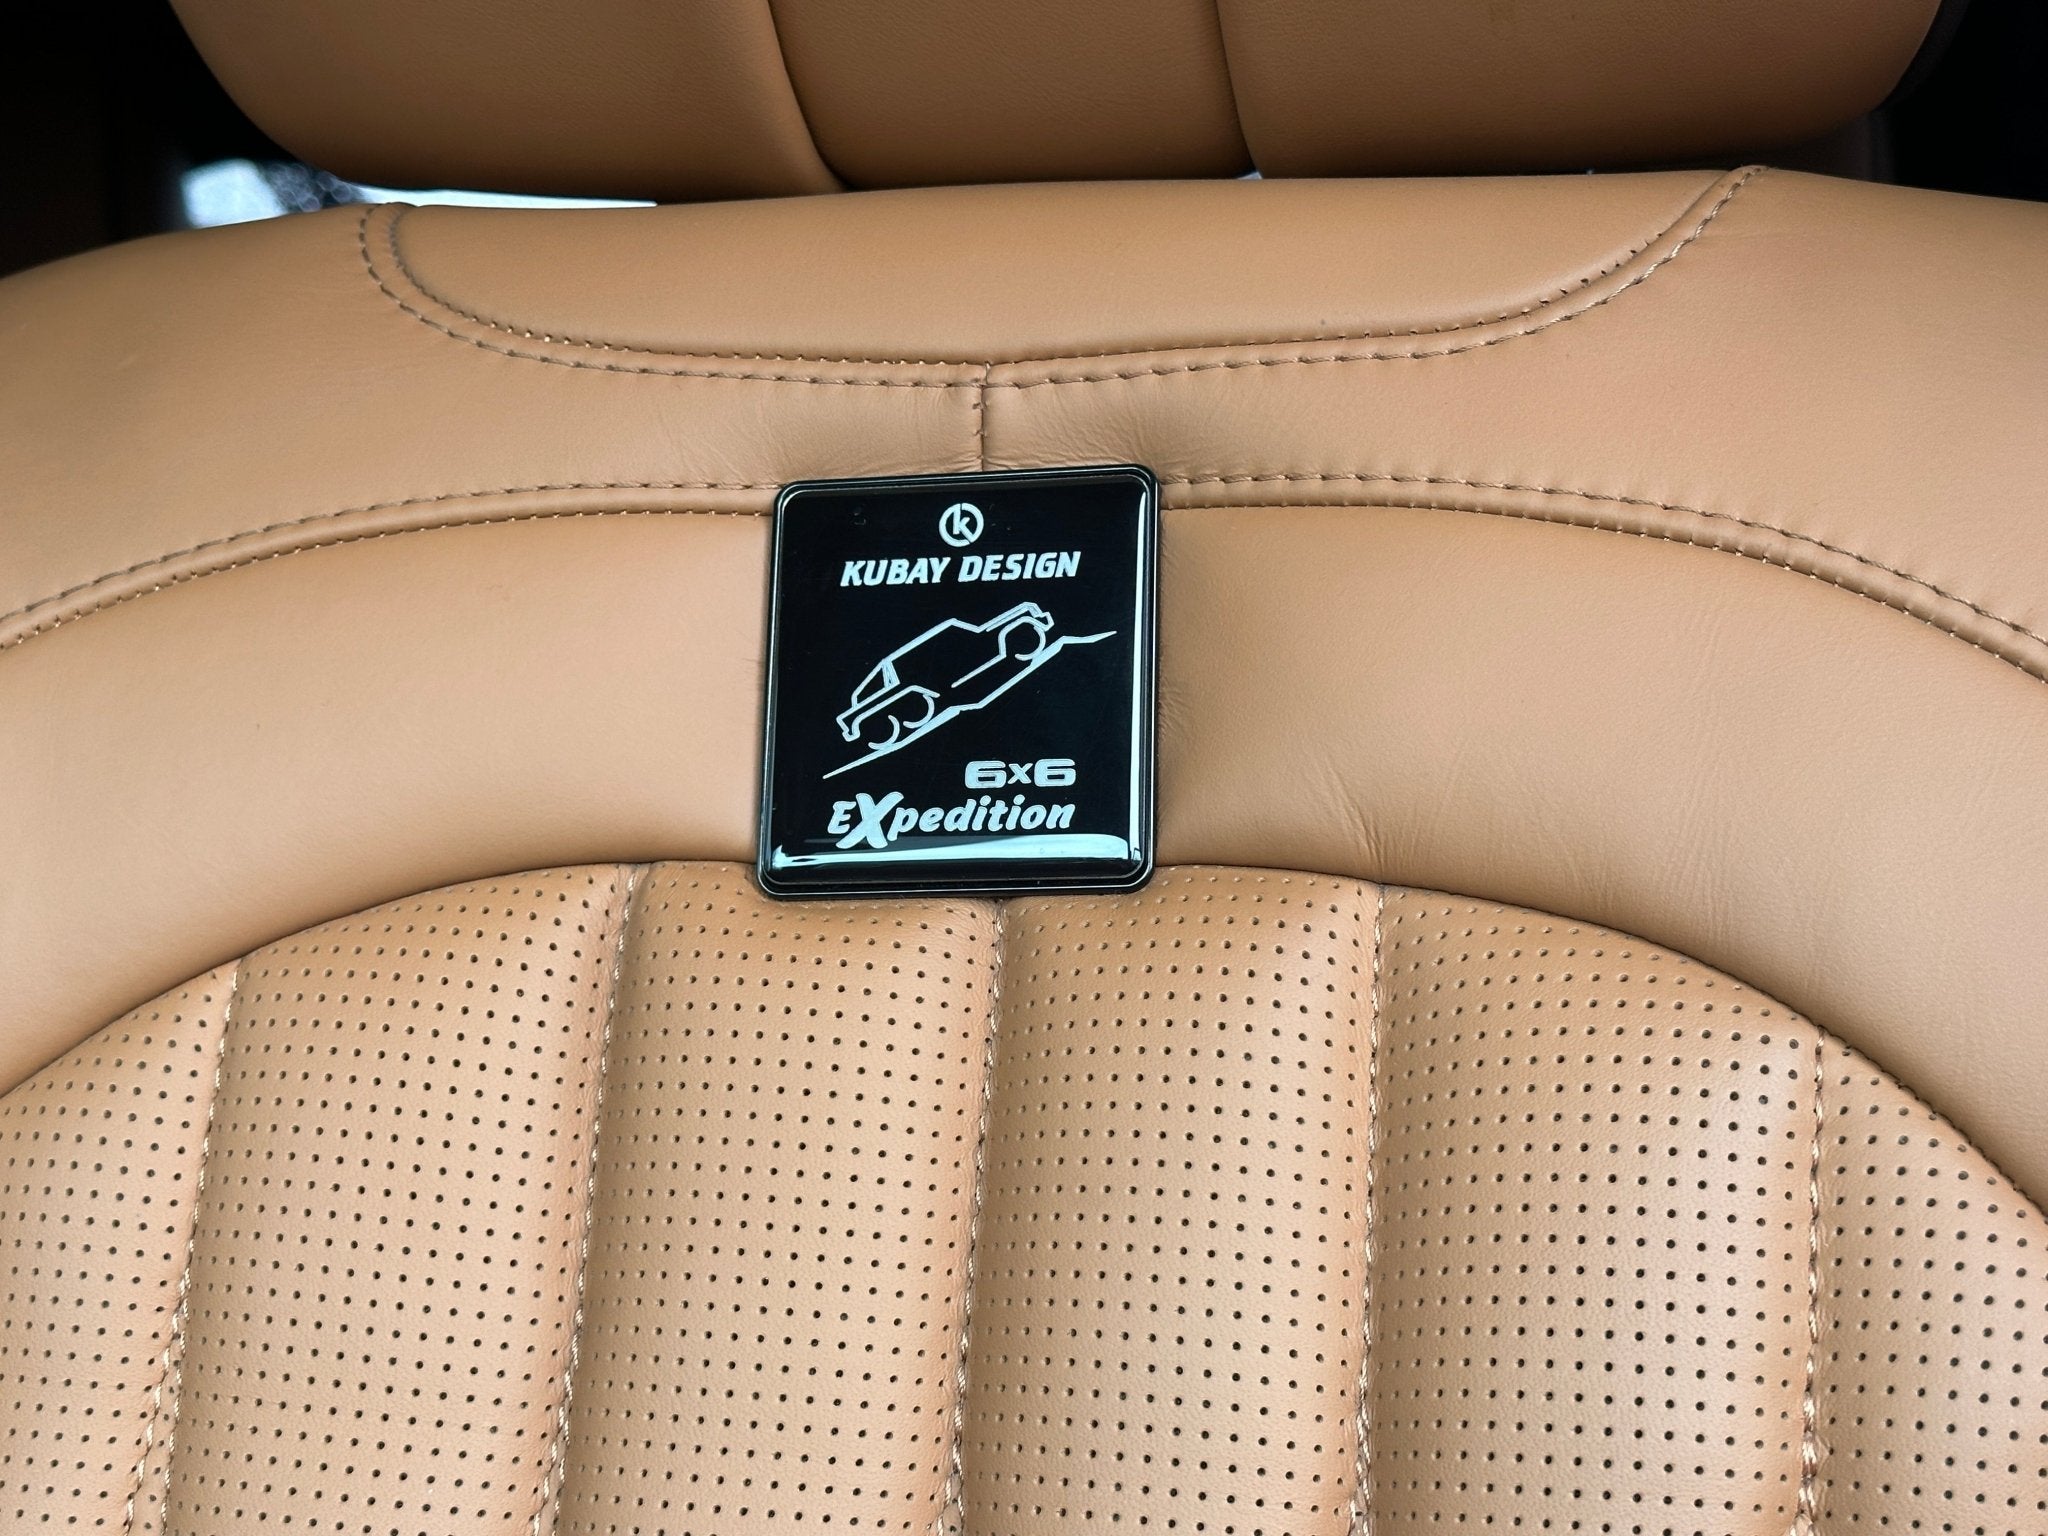 Superblack Kubay Design Expedition 6x6 Metal Seats Emblem Badge Logo 4 pcs set for Mercedes W463 6x6